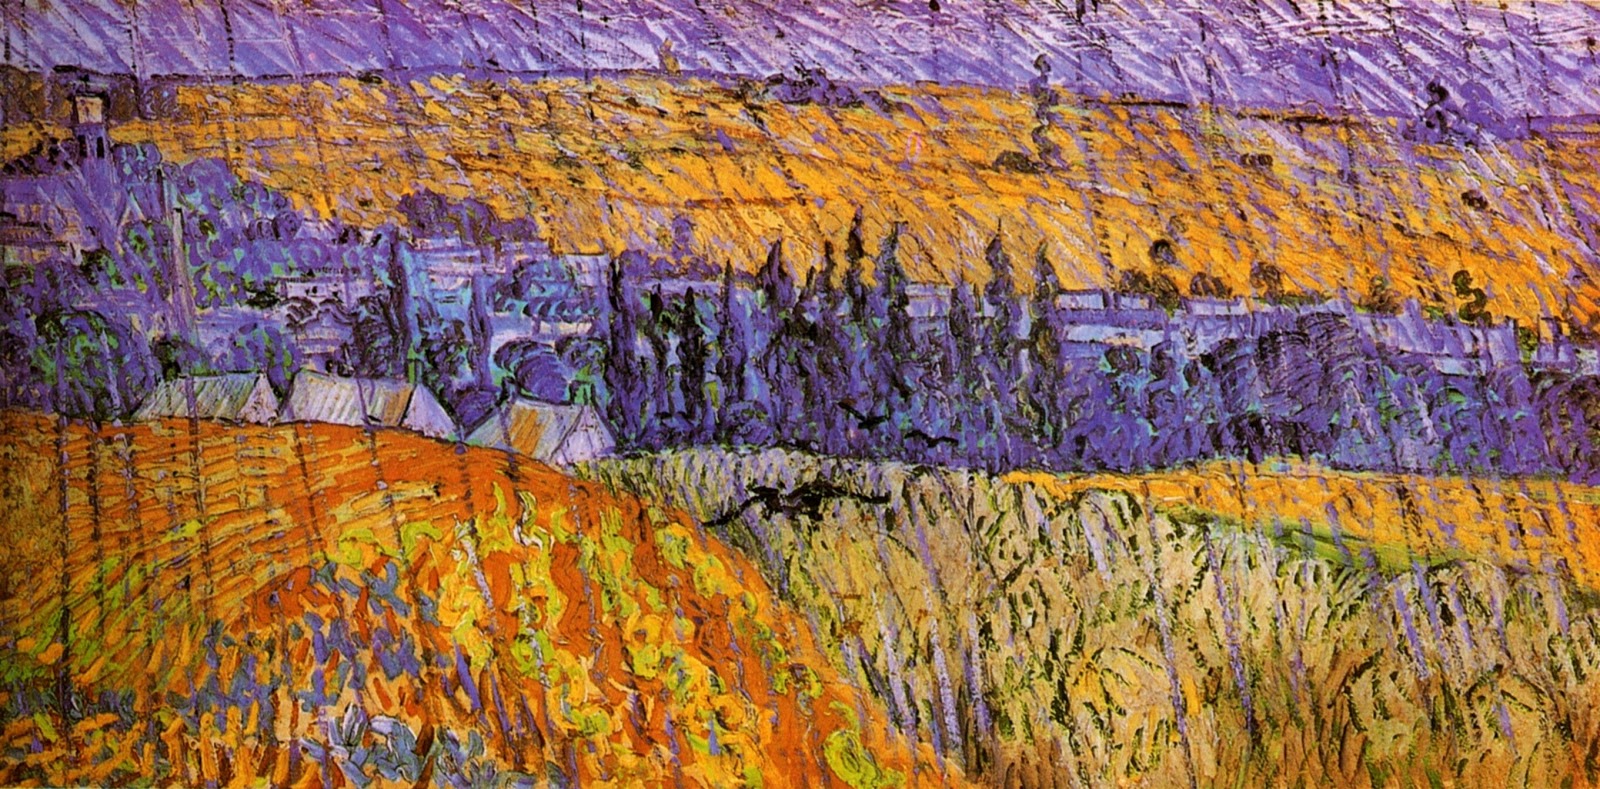 Vincent+Van+Gogh-1853-1890 (790).jpg